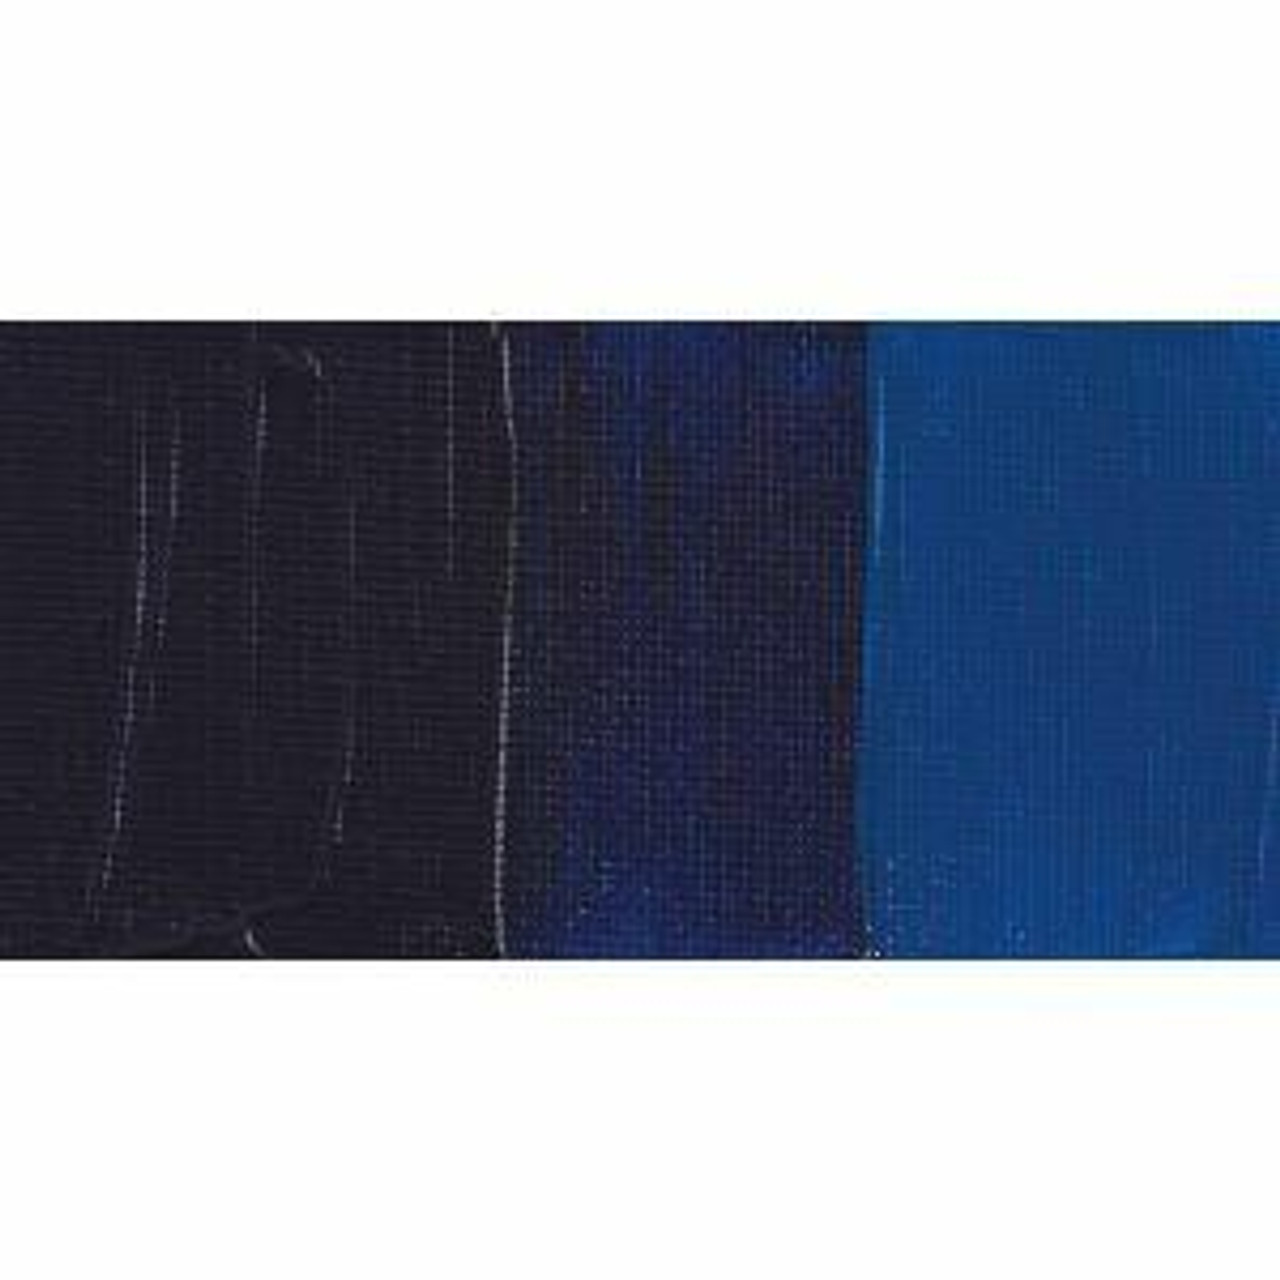 Liquitex BASICS Acrylic Paint Cerulean Blue Hue 4 oz